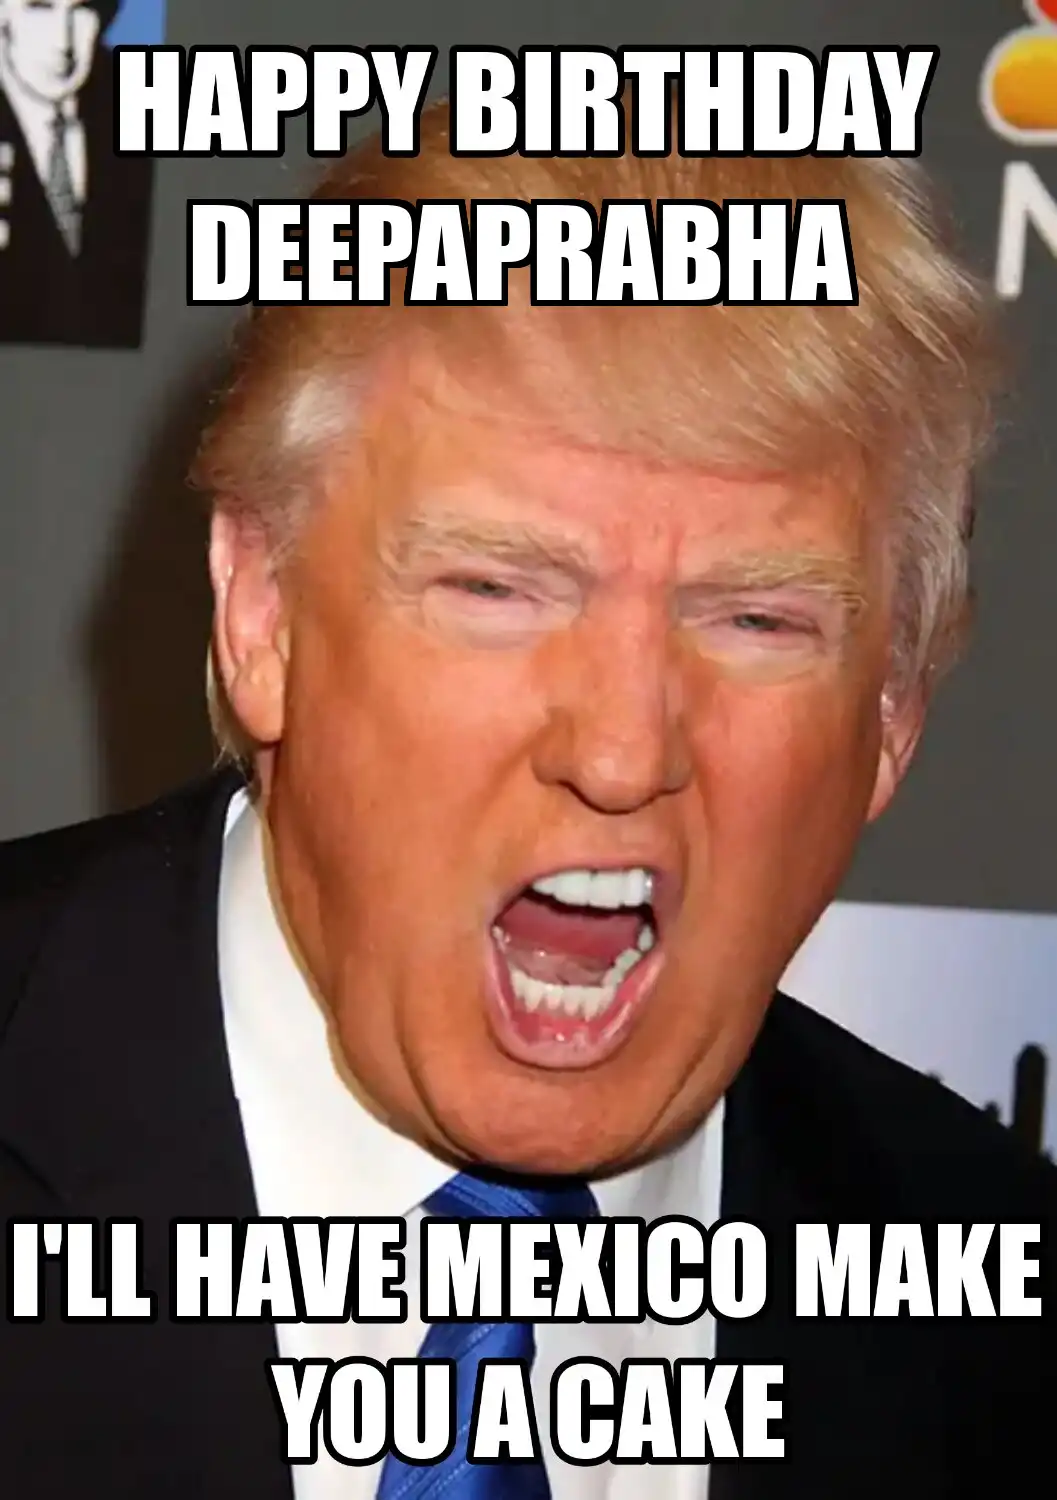 Happy Birthday Deepaprabha Mexico Make You A Cake Meme